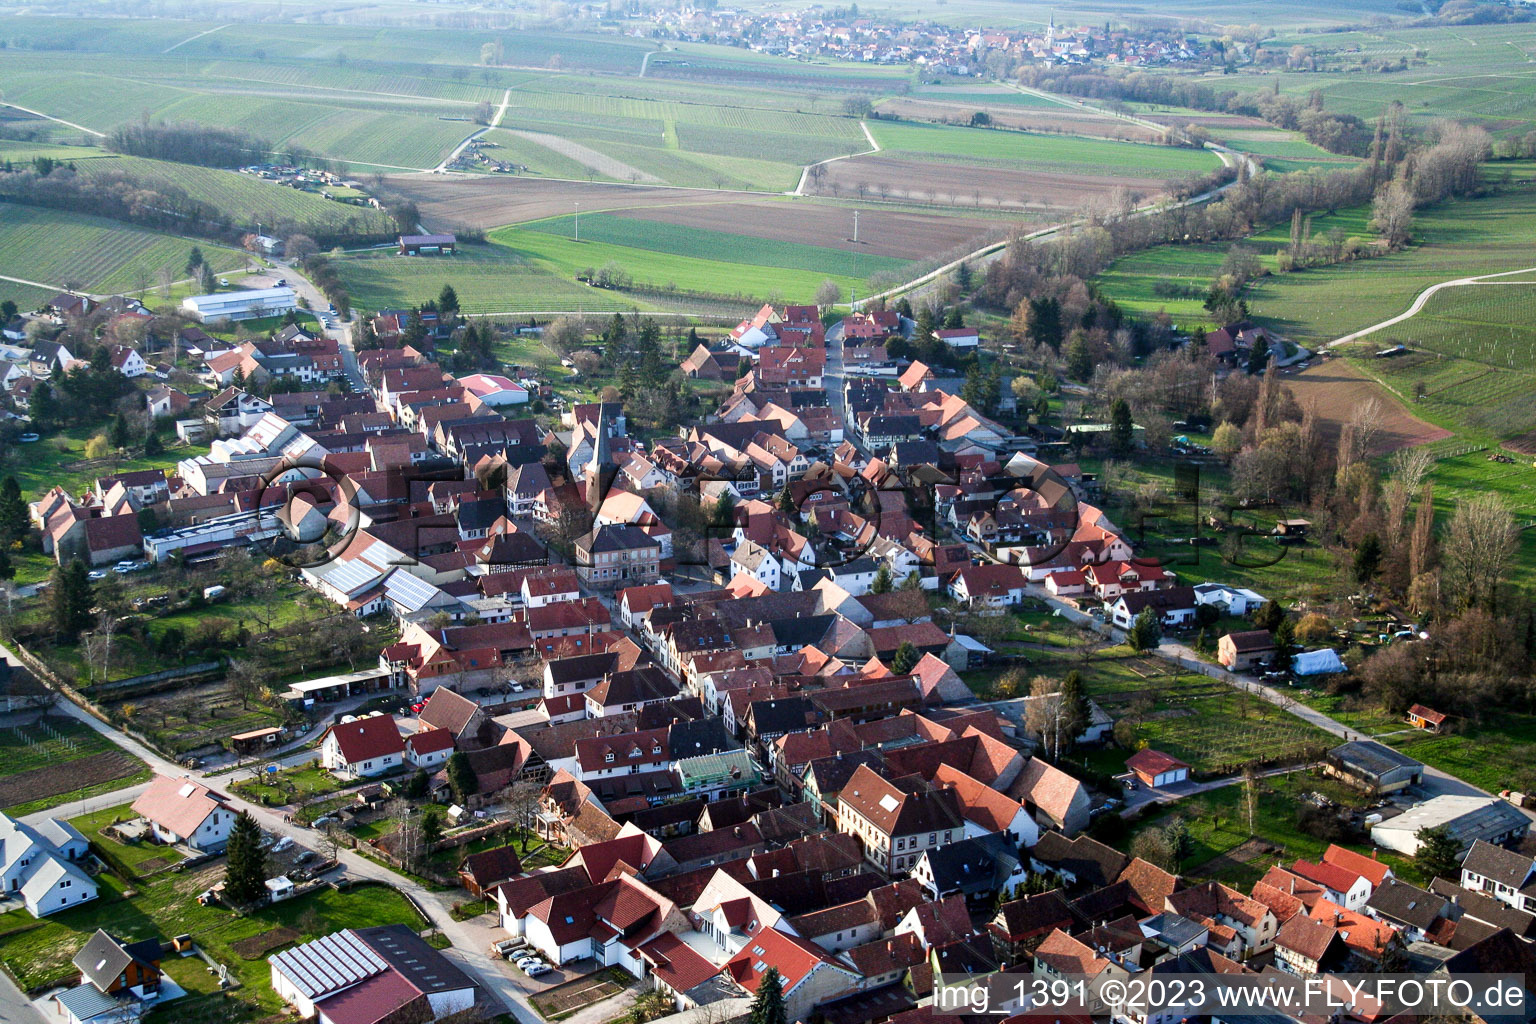 Aerial view of Sound in the district Appenhofen in Billigheim-Ingenheim in the state Rhineland-Palatinate, Germany